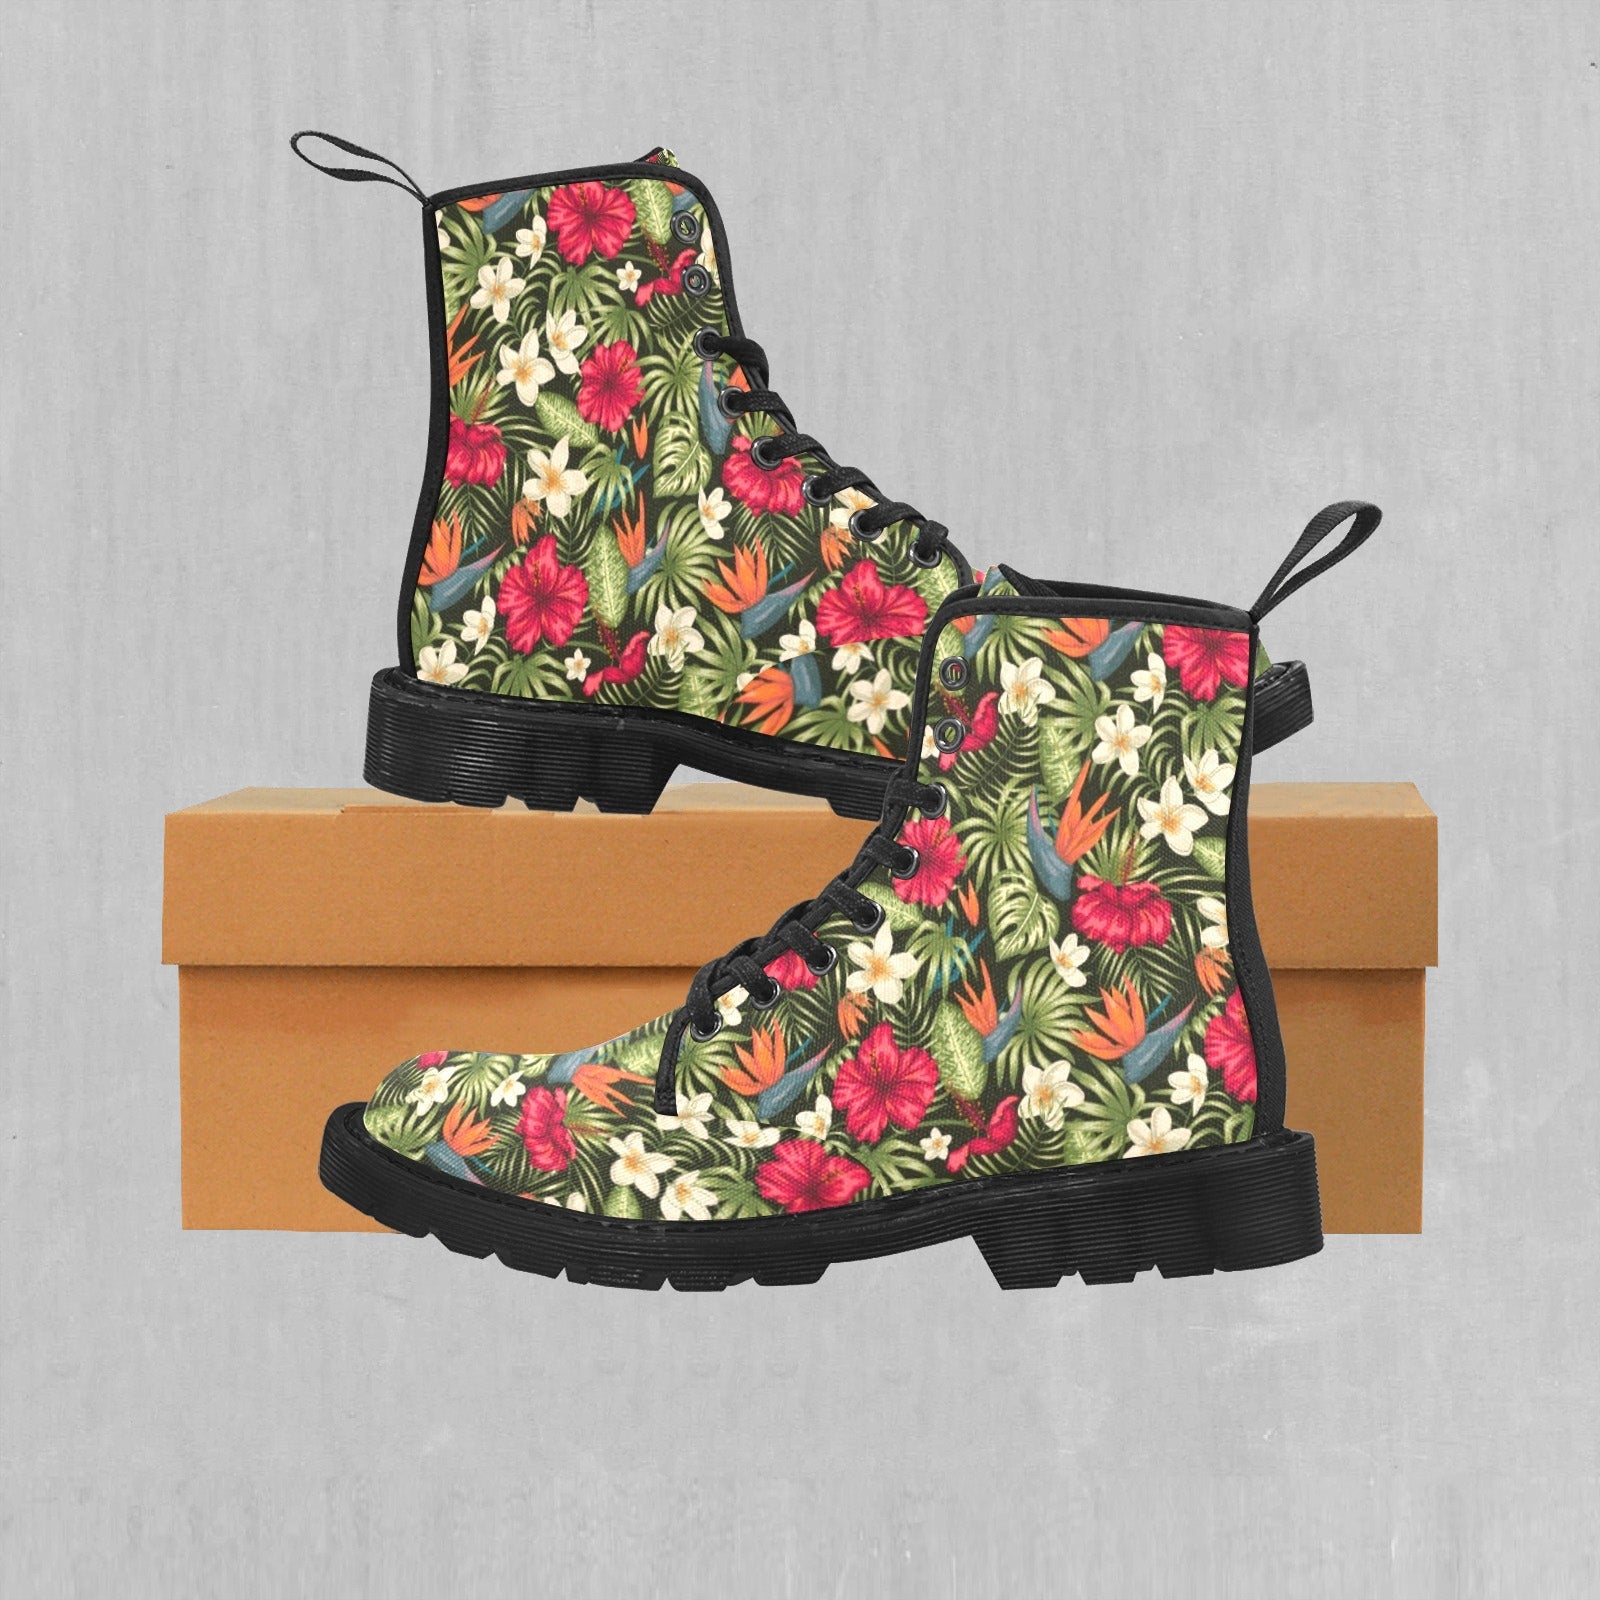 Botanical Women's Boots